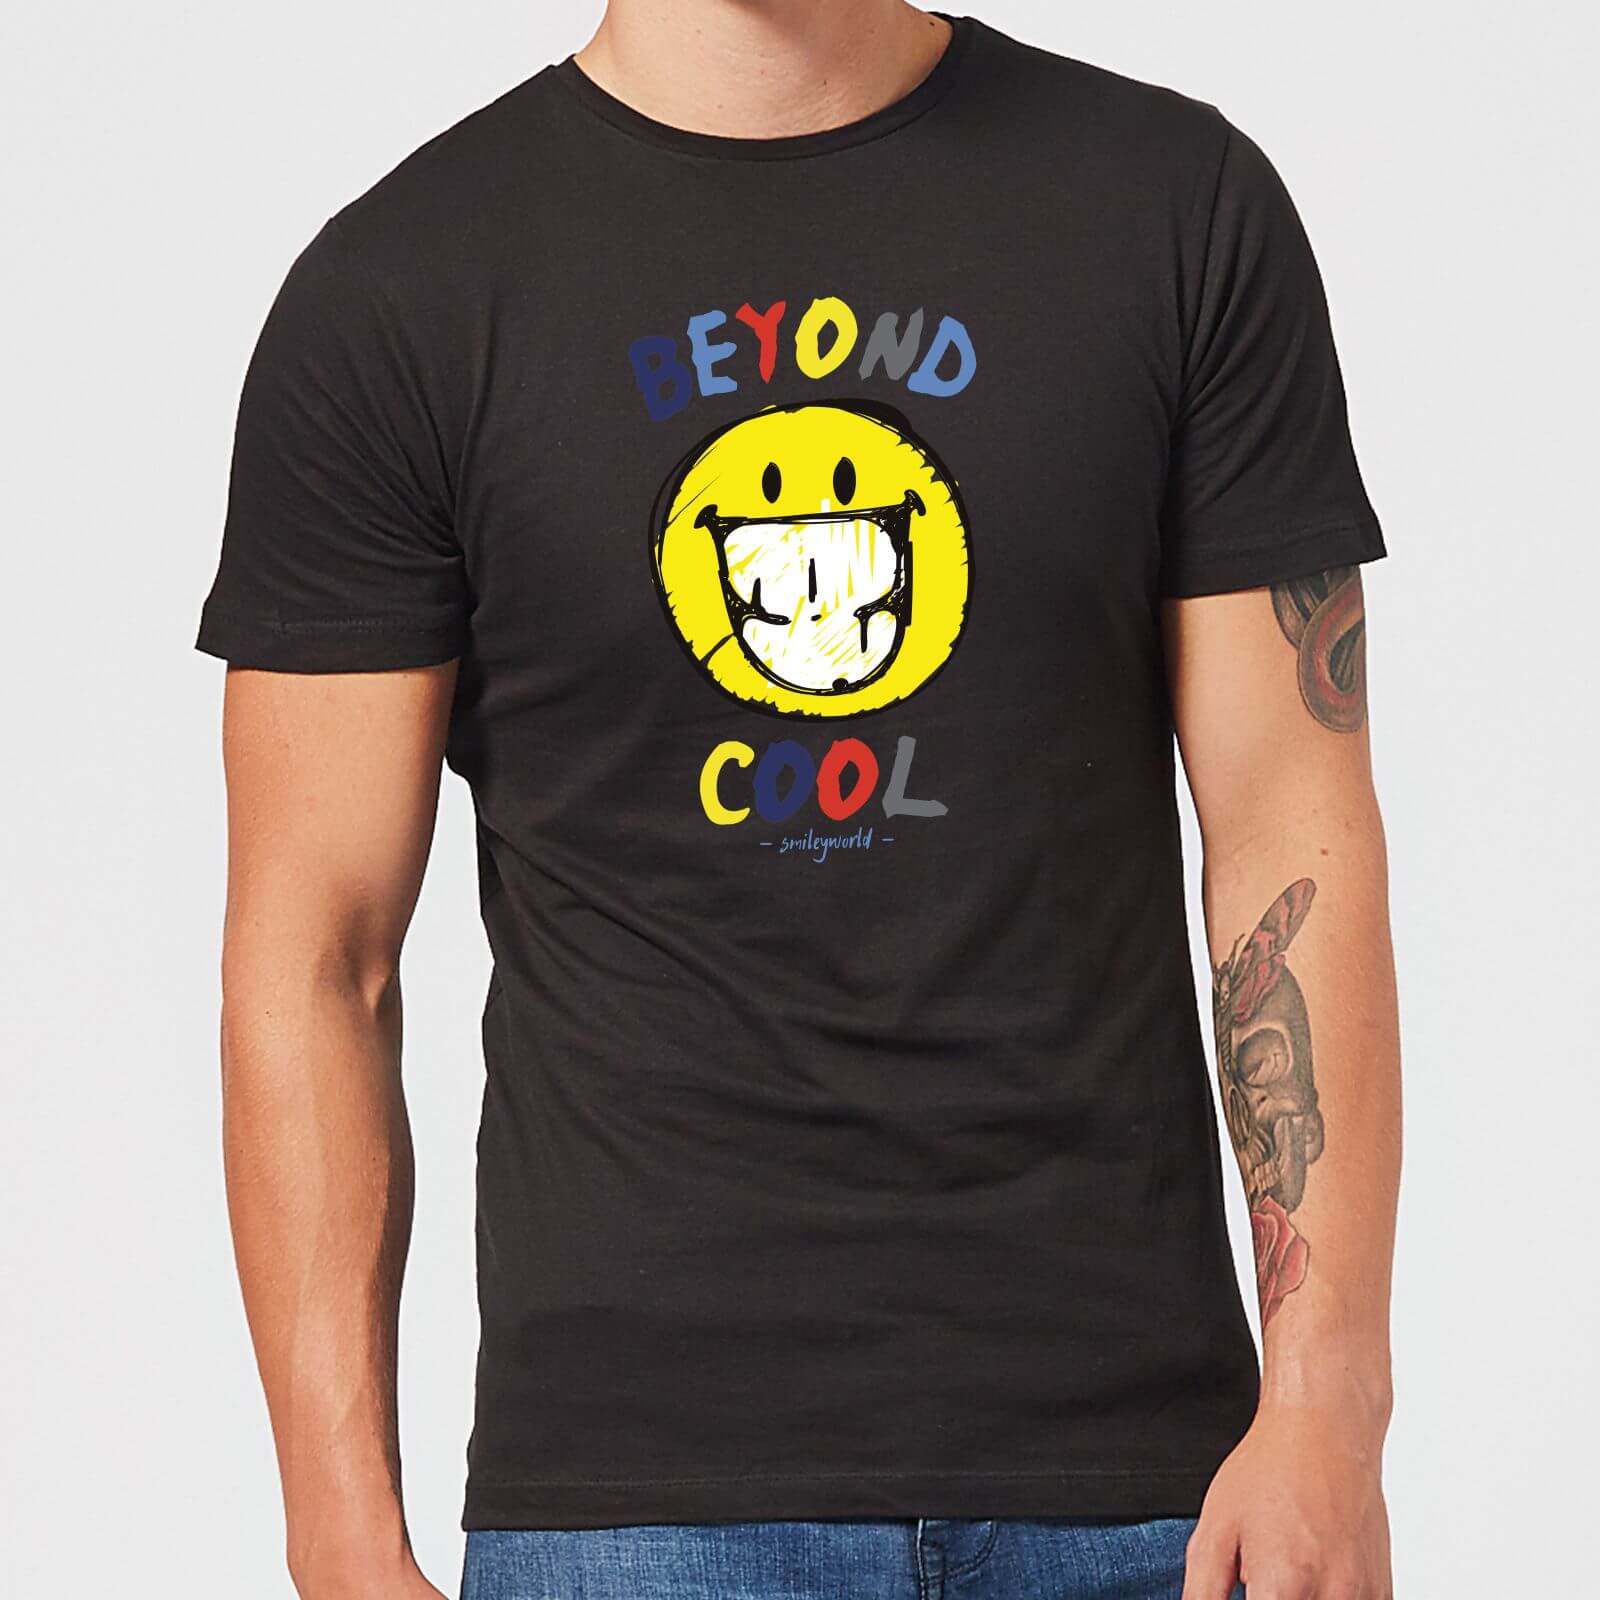 Beyond Cool Men's T-Shirt - Black - S